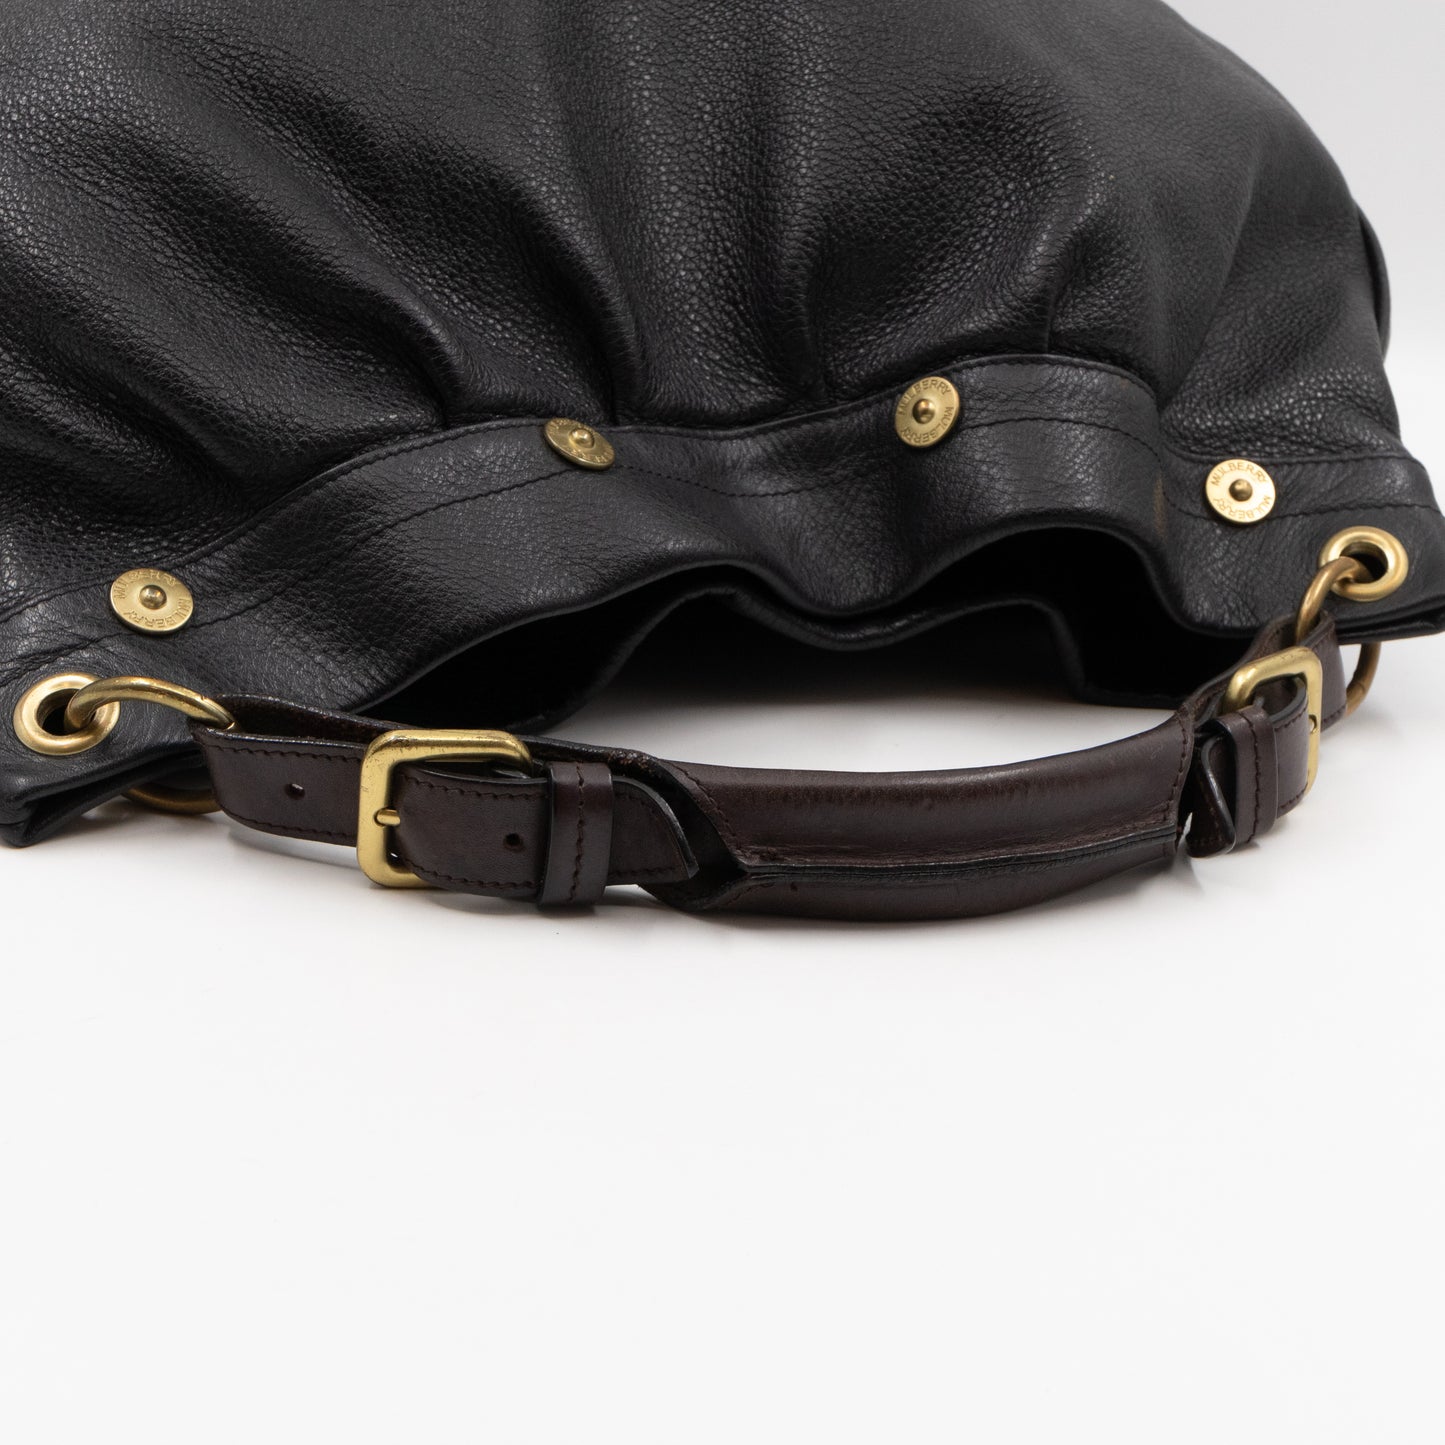 Mitzy East West Hobo Bag Black Leather